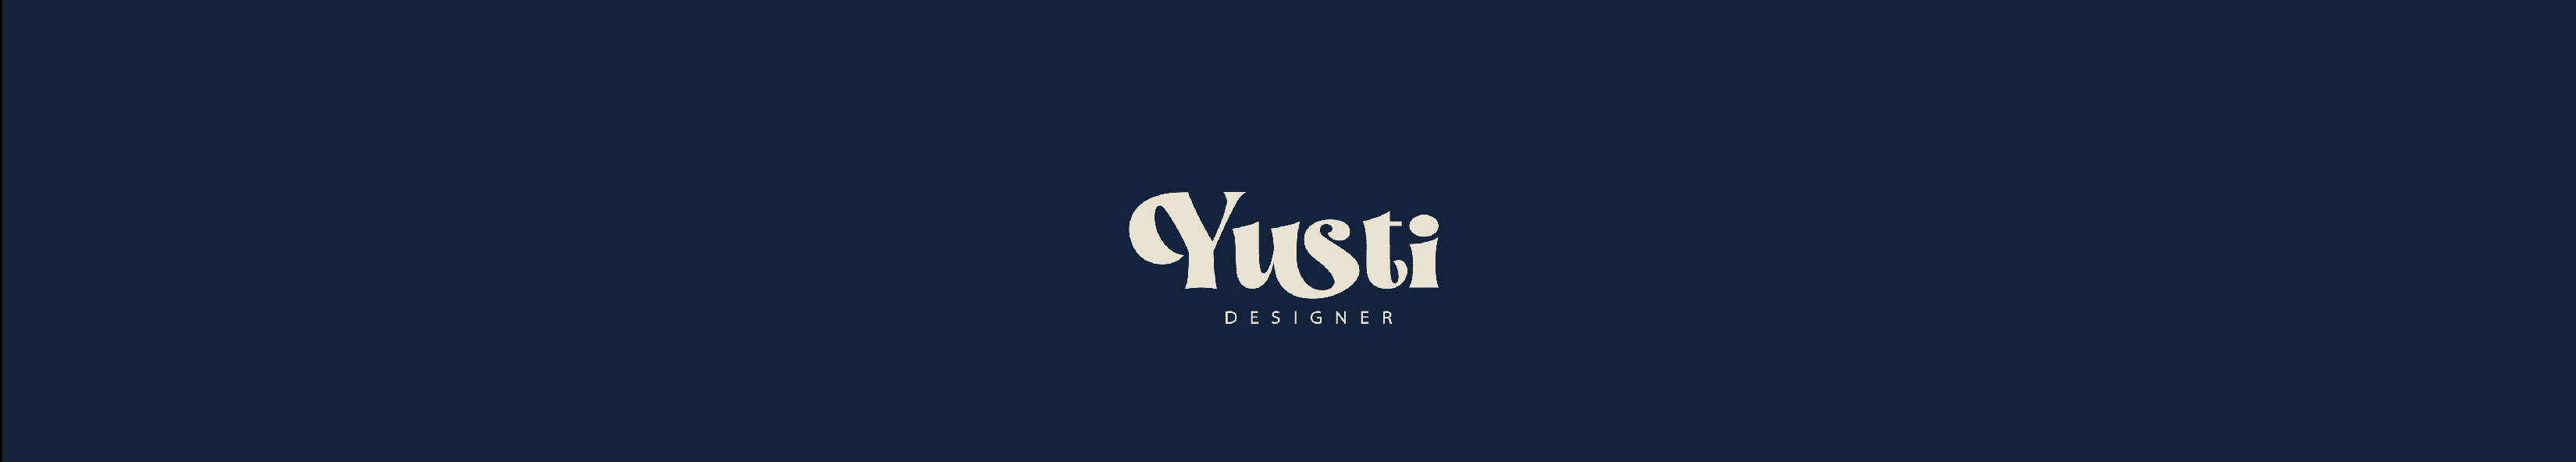 Yangely Yusti's profile banner